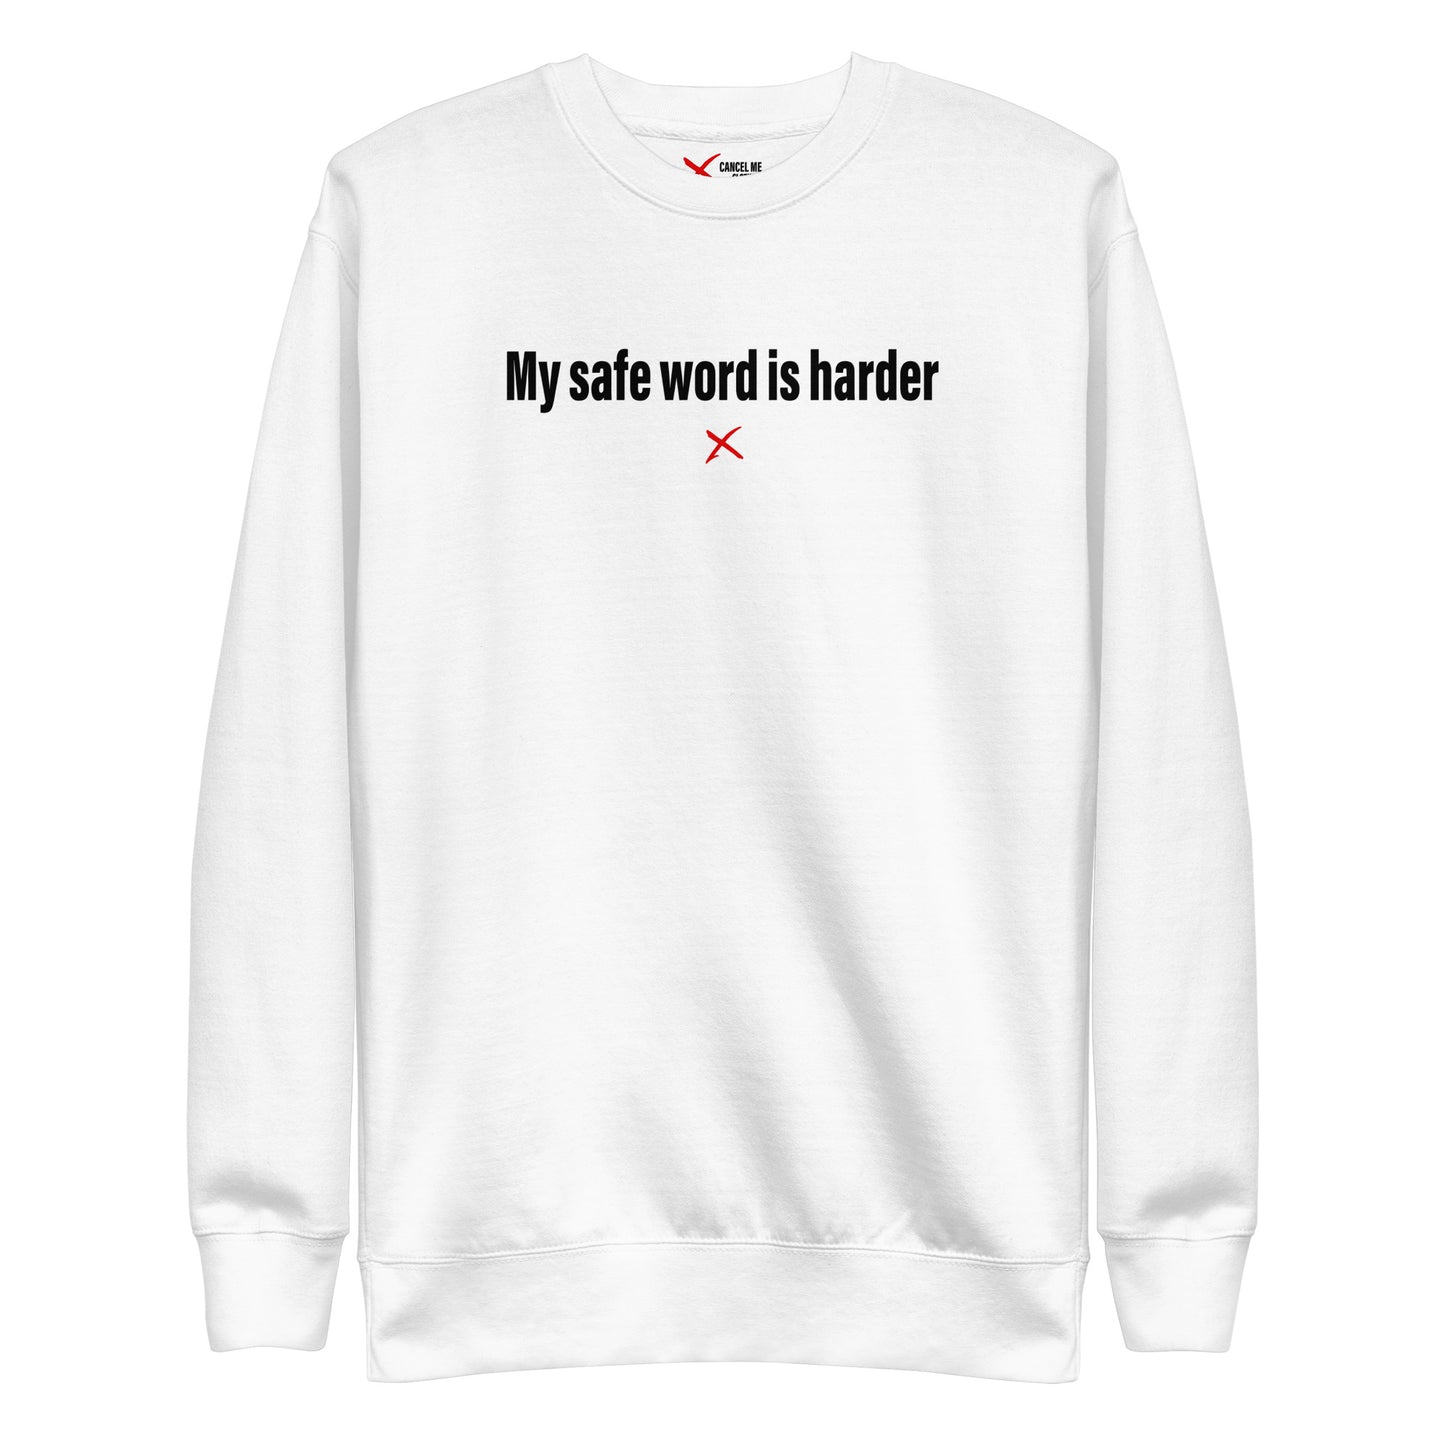 My safe word is harder - Sweatshirt